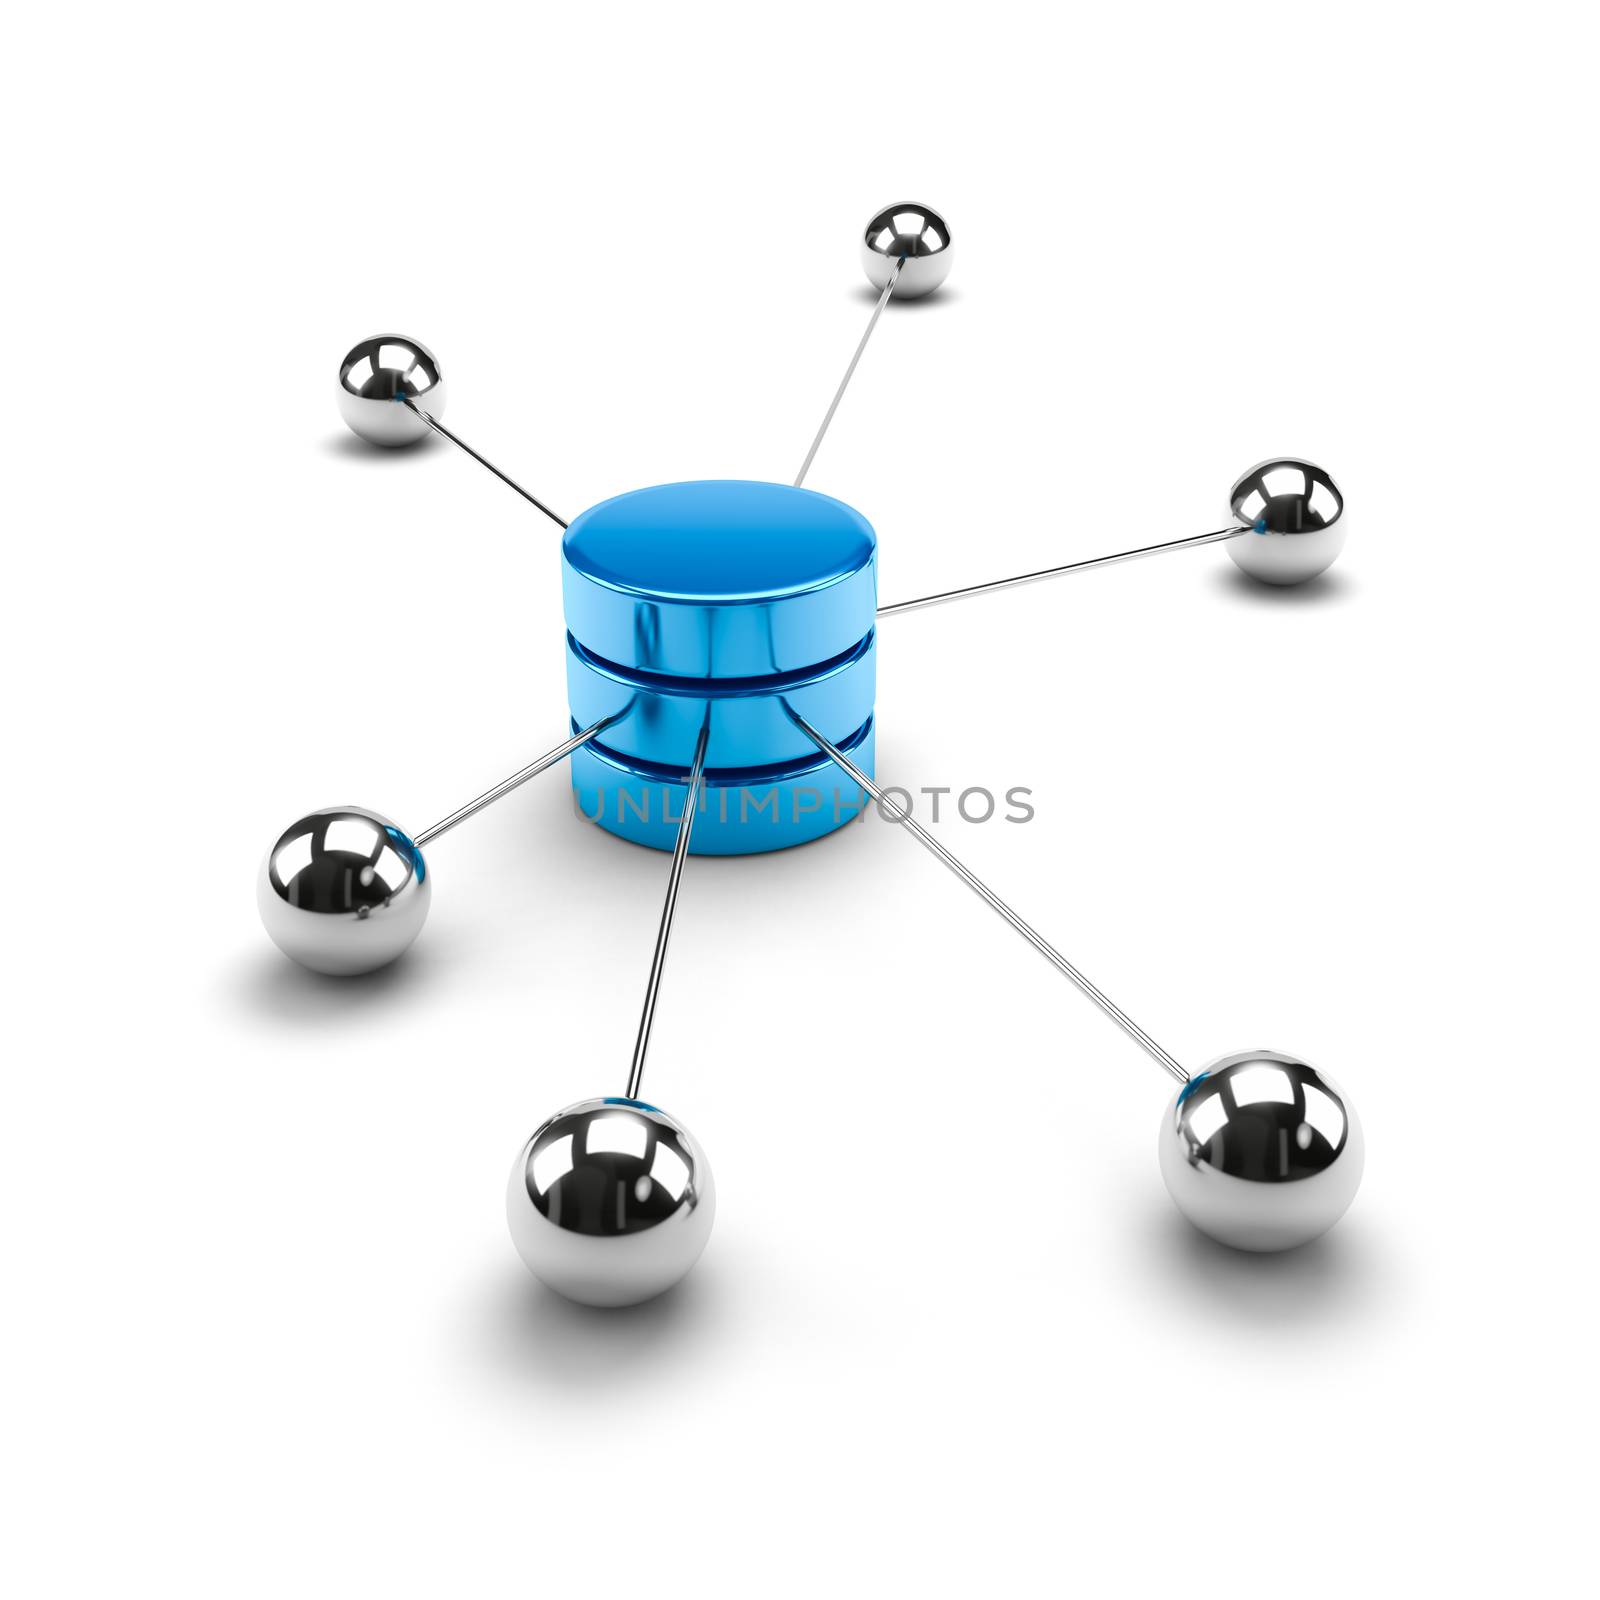 Network Computing Data Storage Concept by make